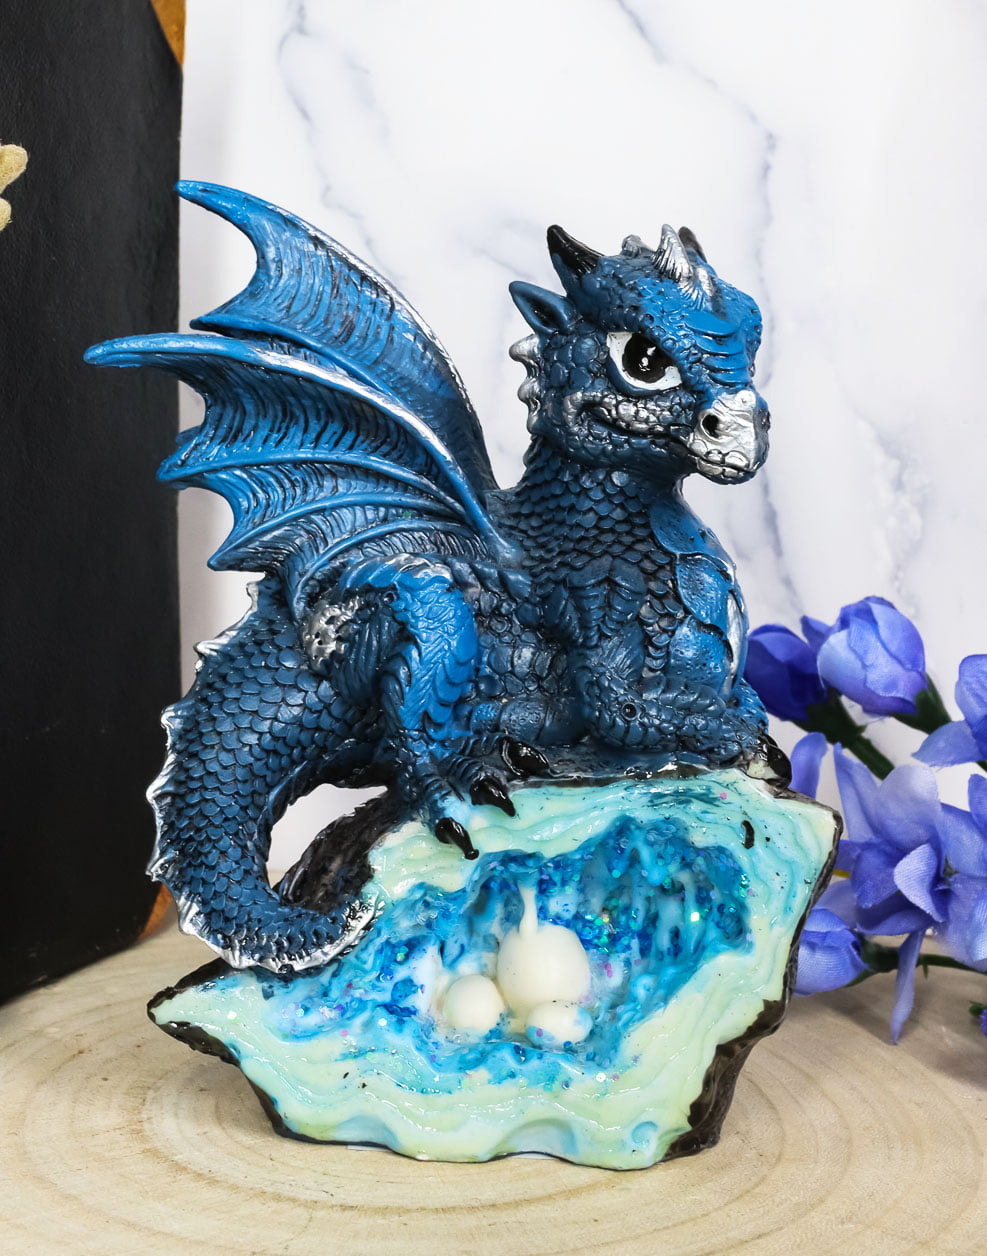 Blue Dragon with Crystal Egg Nest Medieval Fantasy Figurine Decoration New